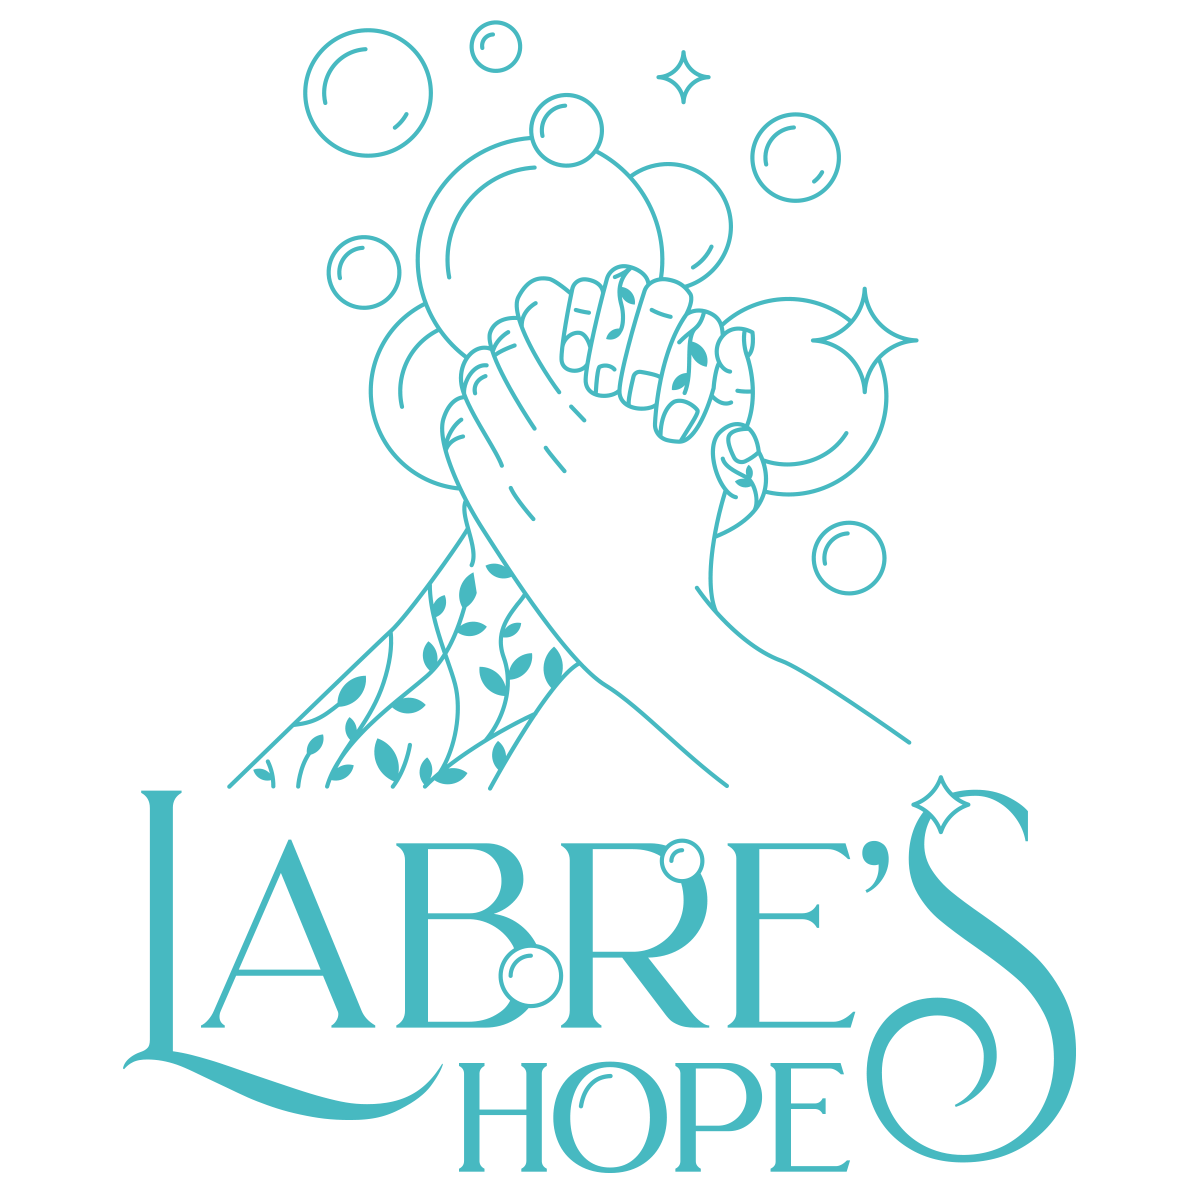 Labre's Hope